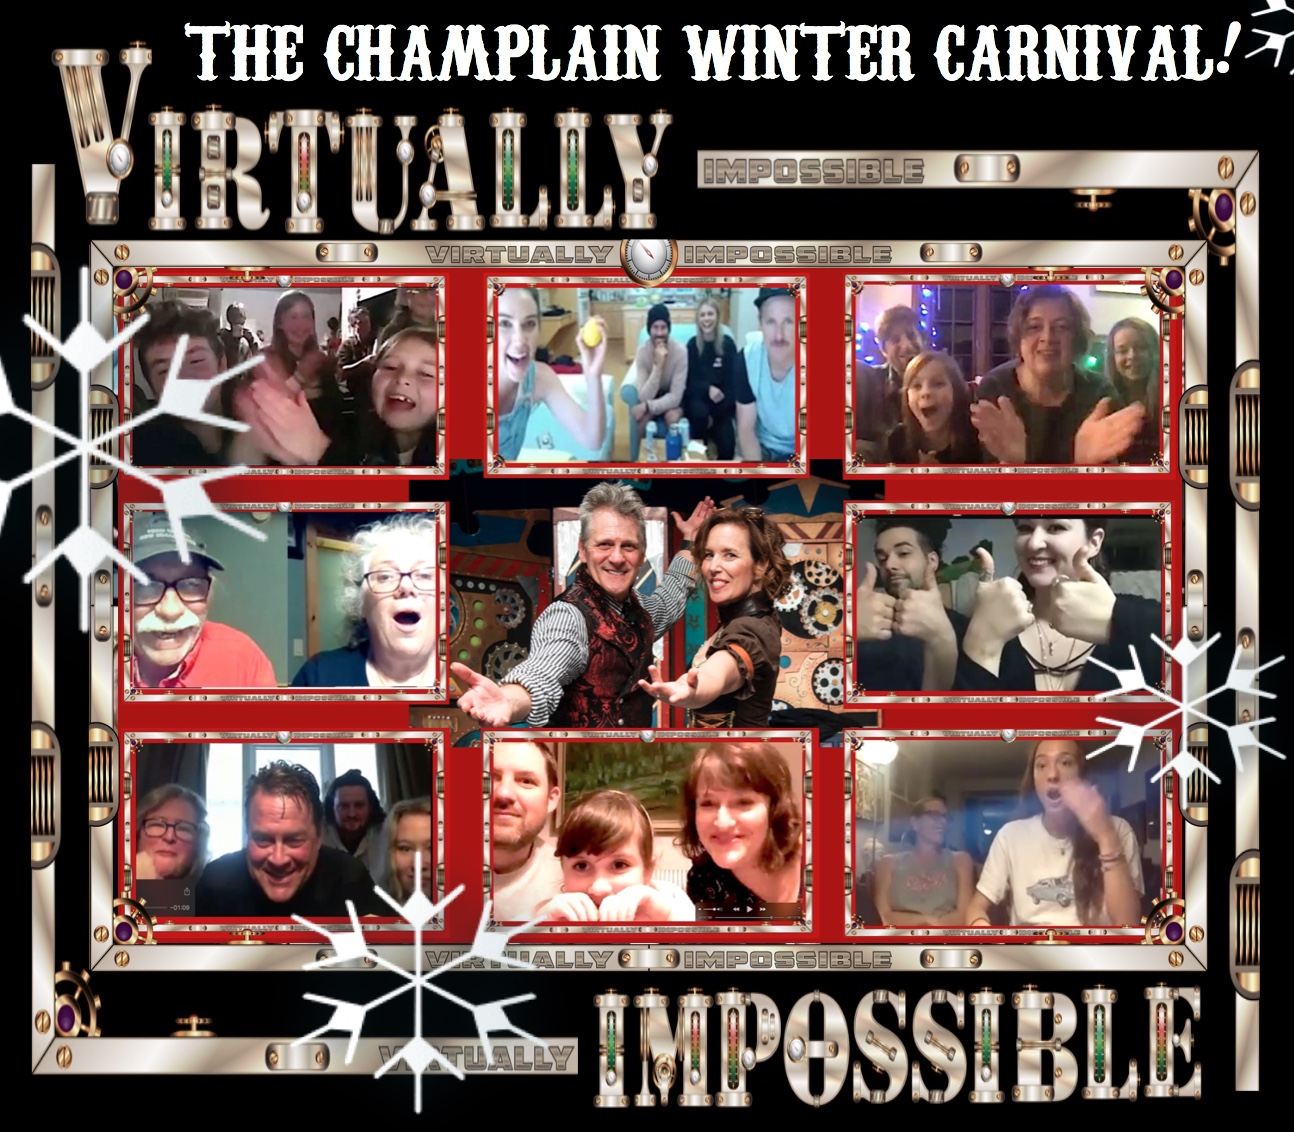 Enjoy a virtual show as part of Champlain Carnival